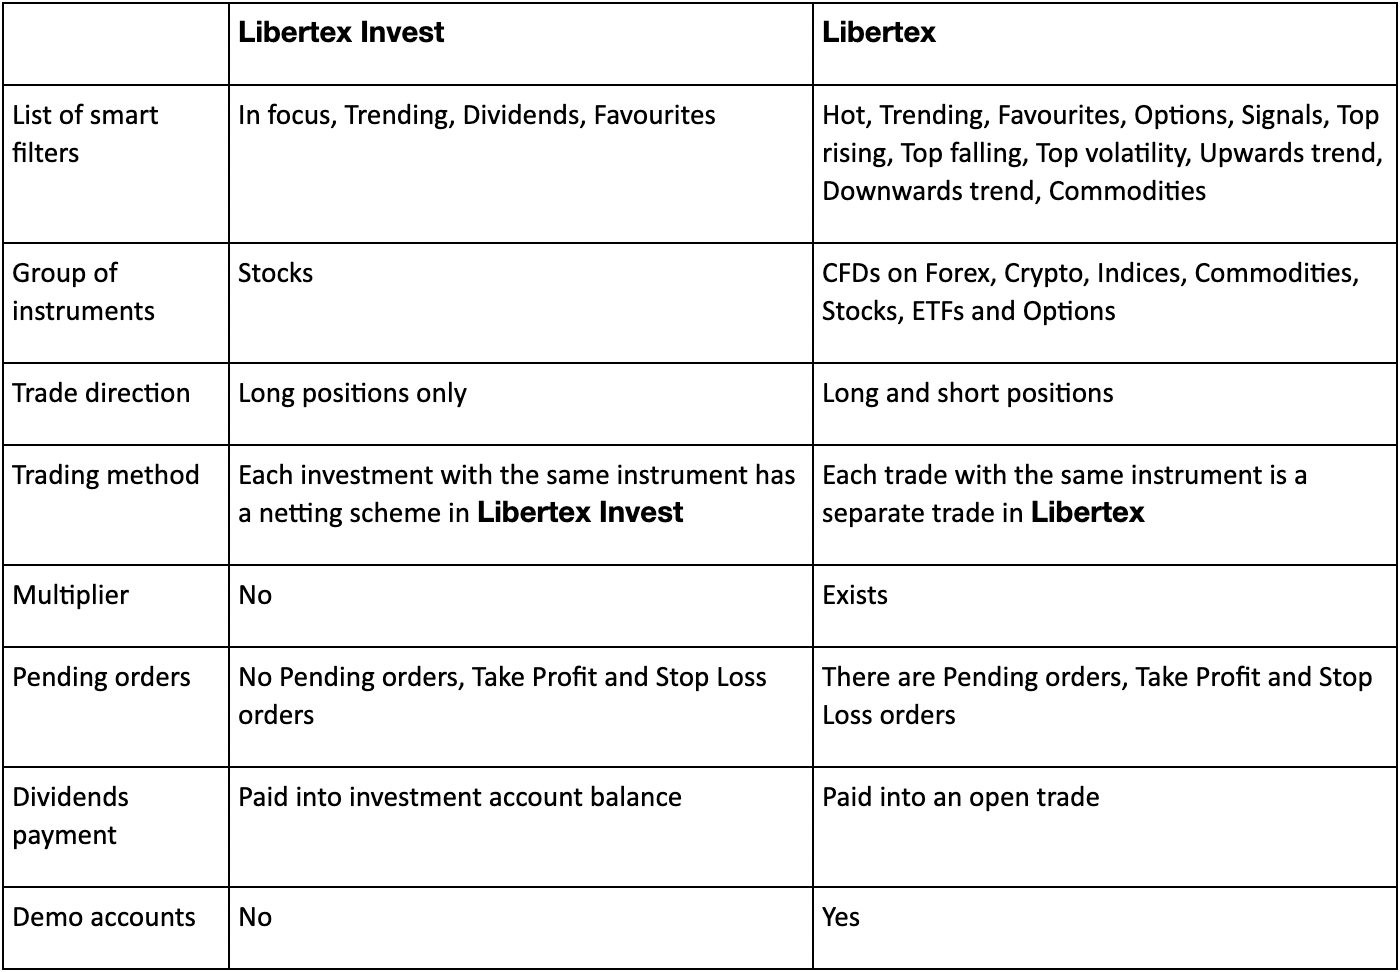 libertex_investment